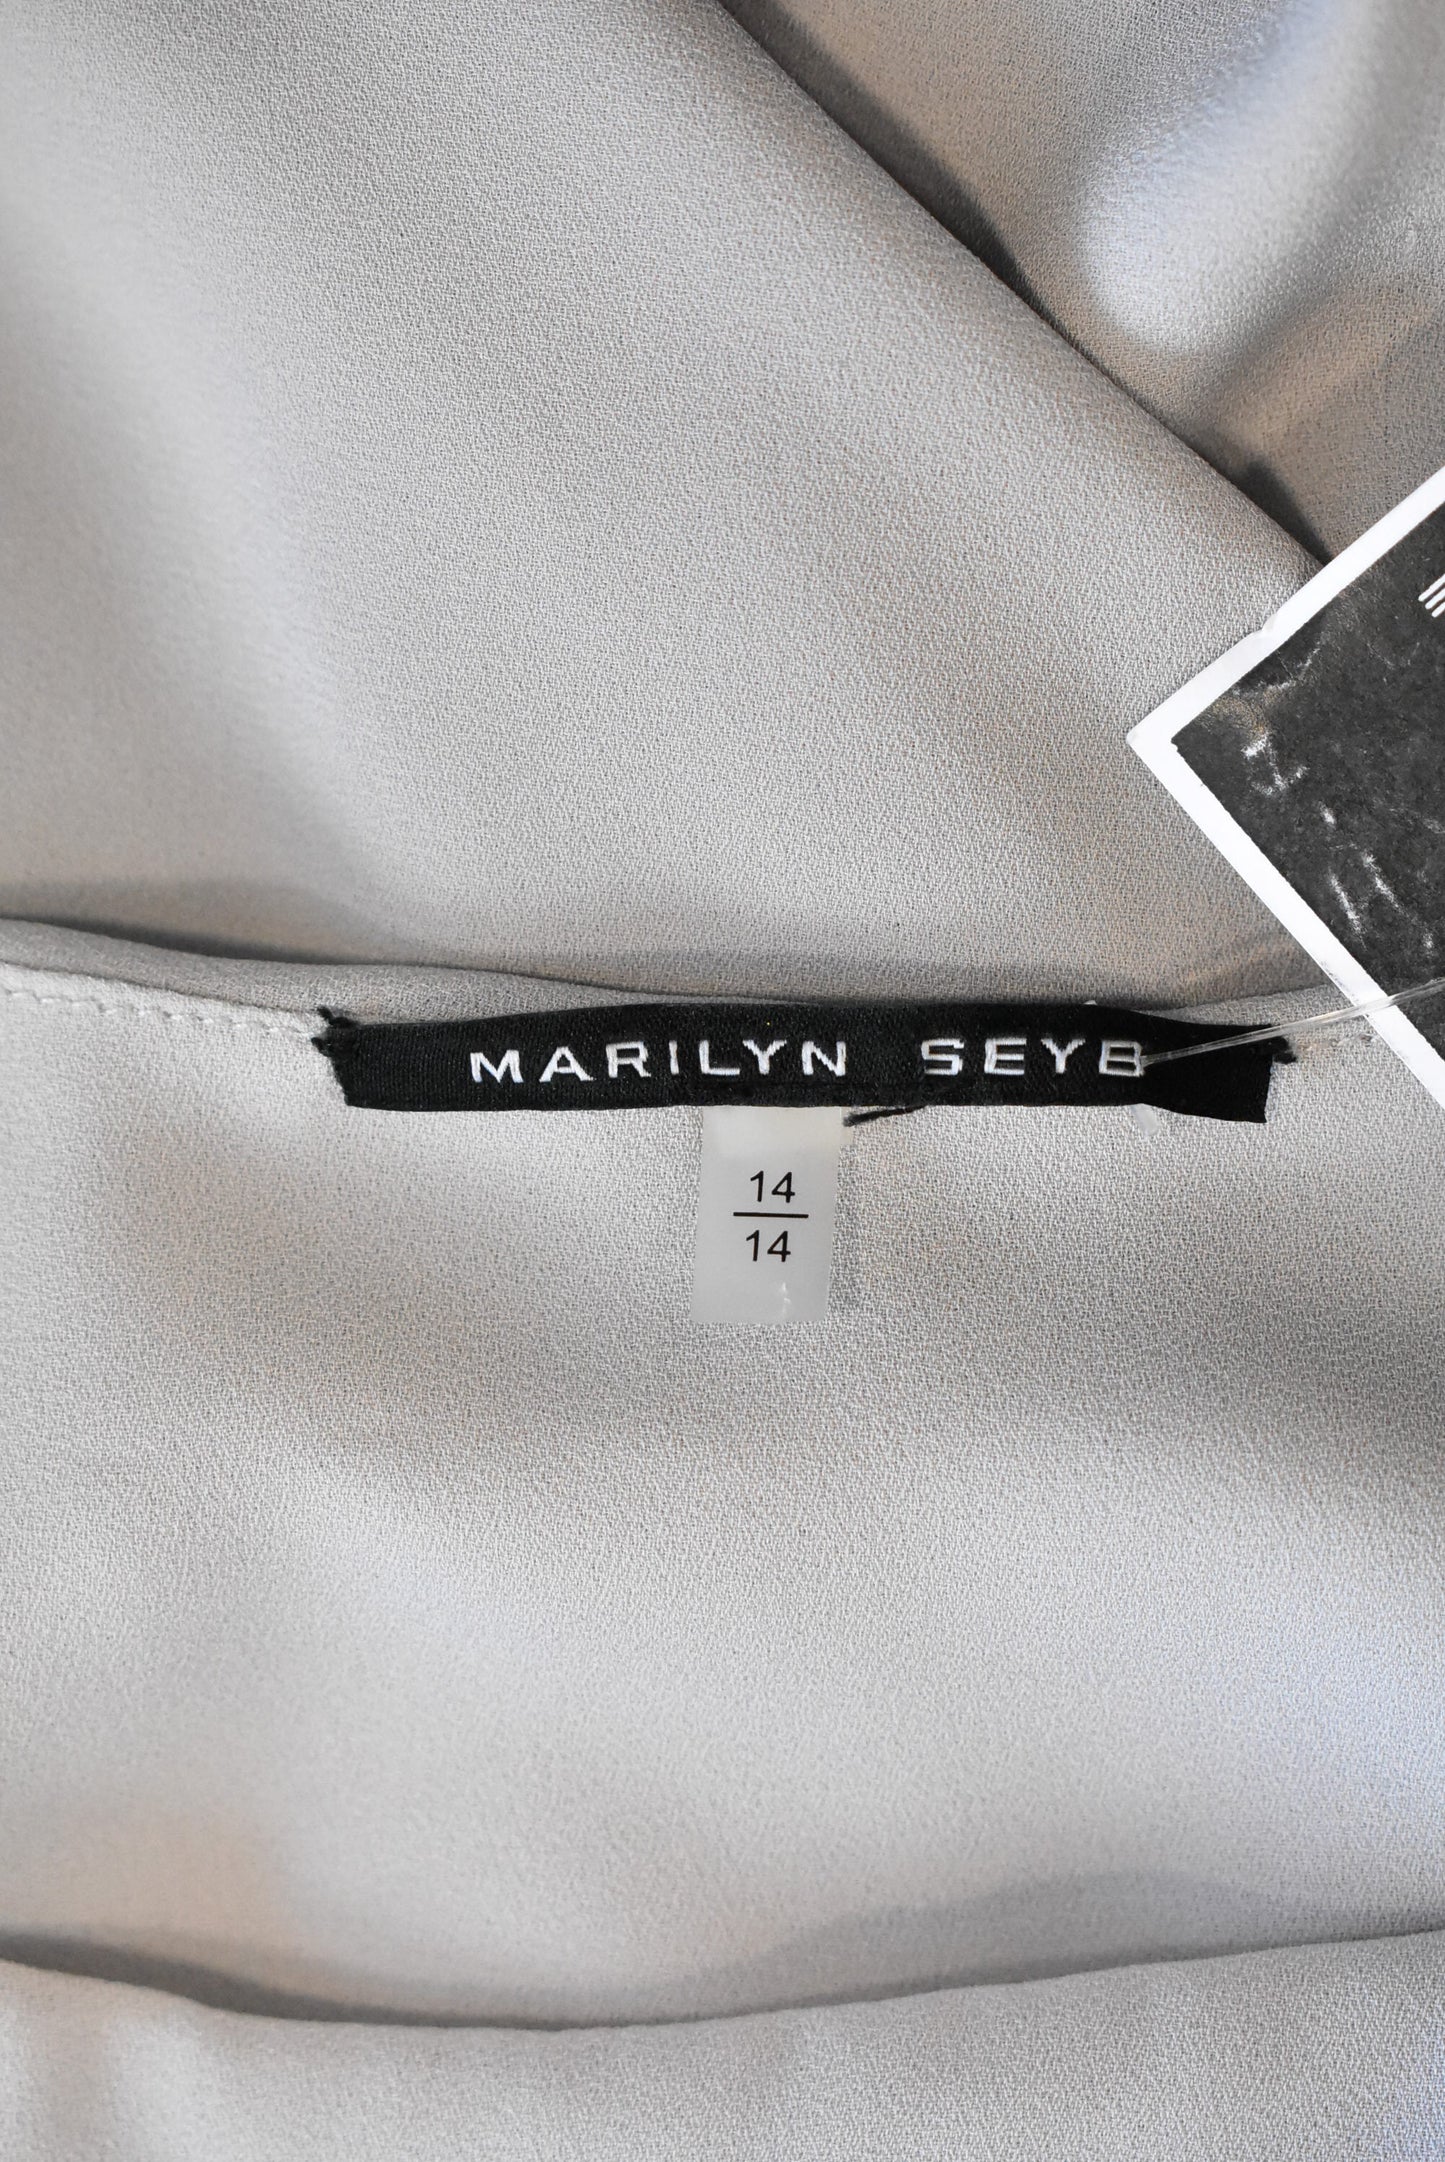 Marilyn Seyb pearl grey sleeveless dress, 14